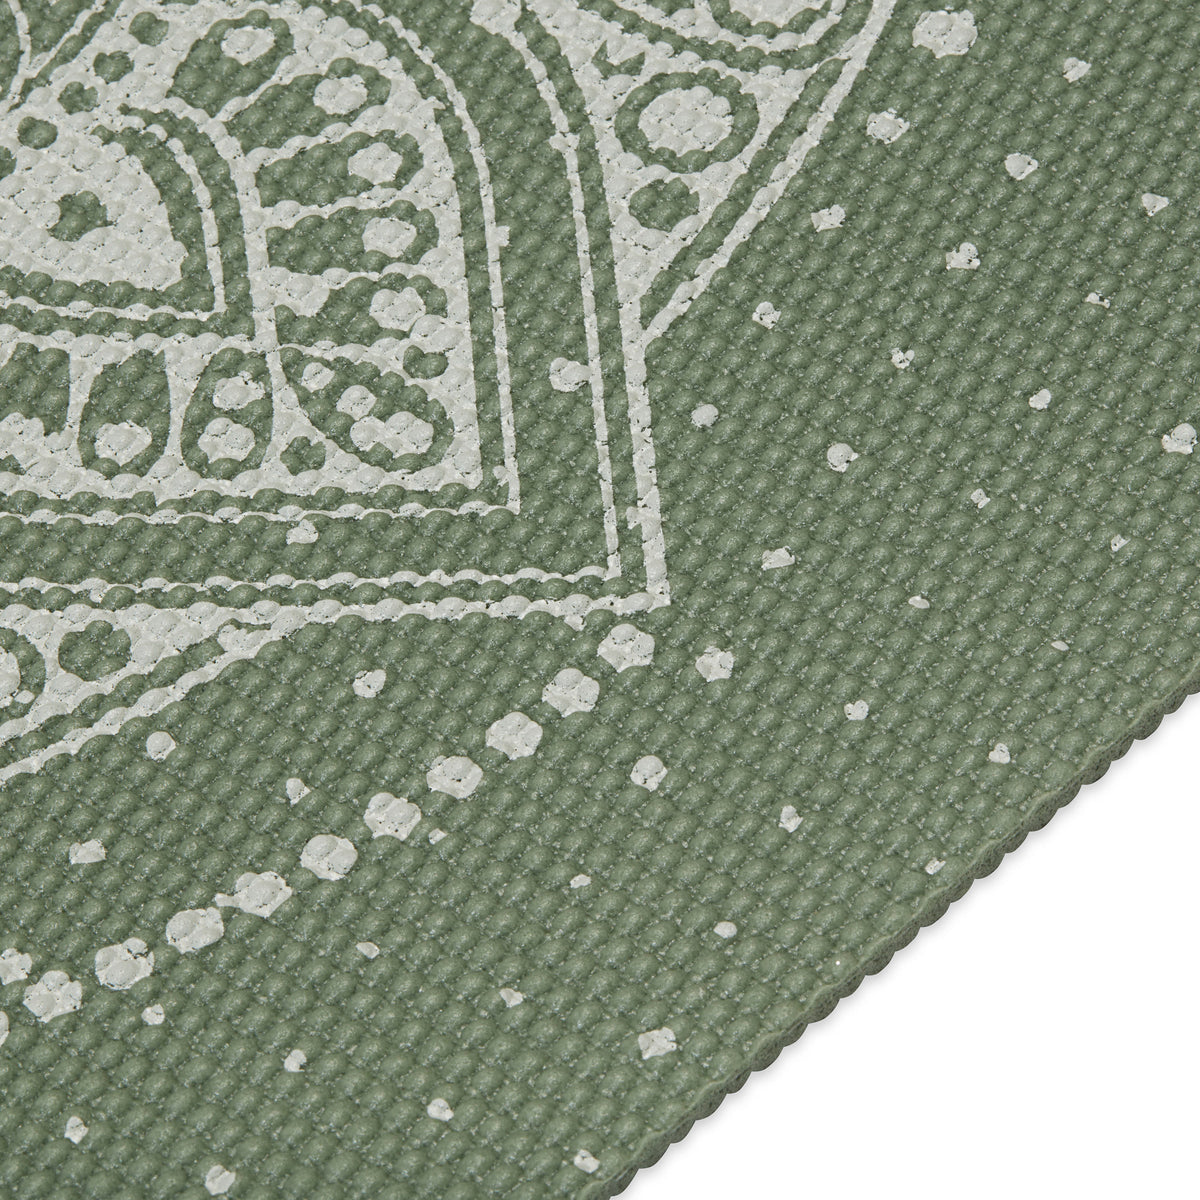 Gaiam Celestial Green Yoga Mat (5mm) closeup